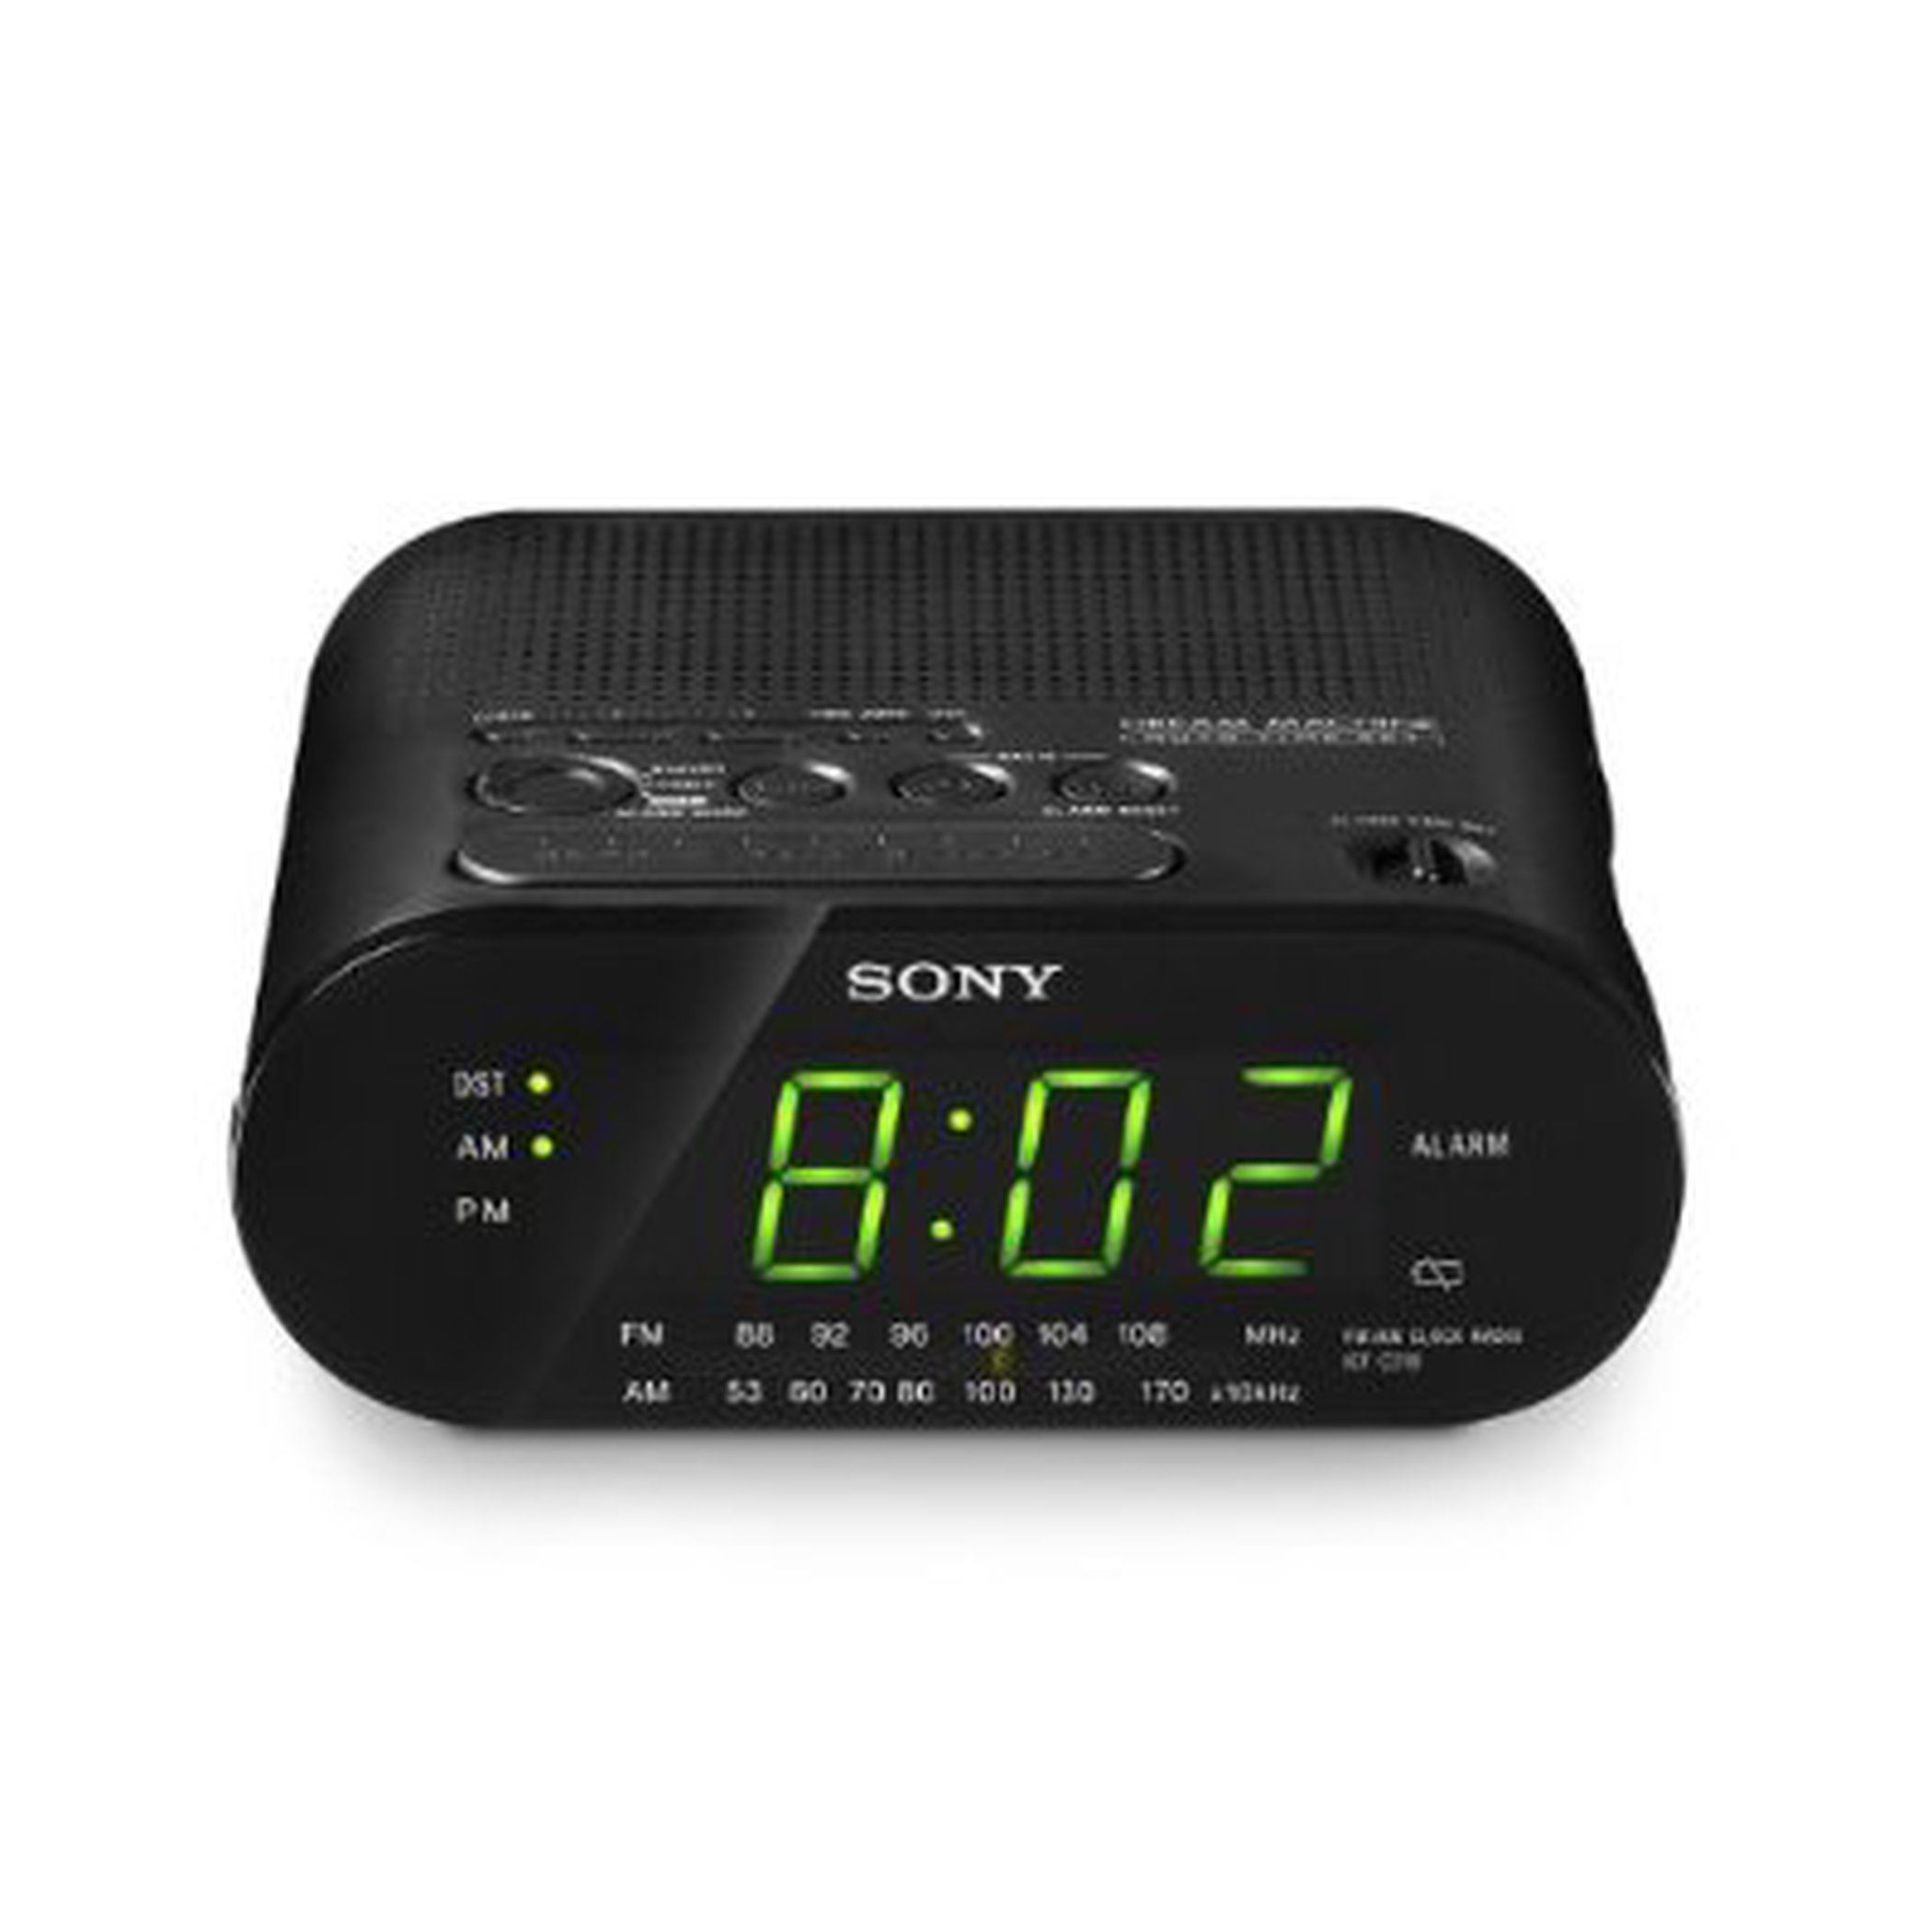 sony alarm clock time set